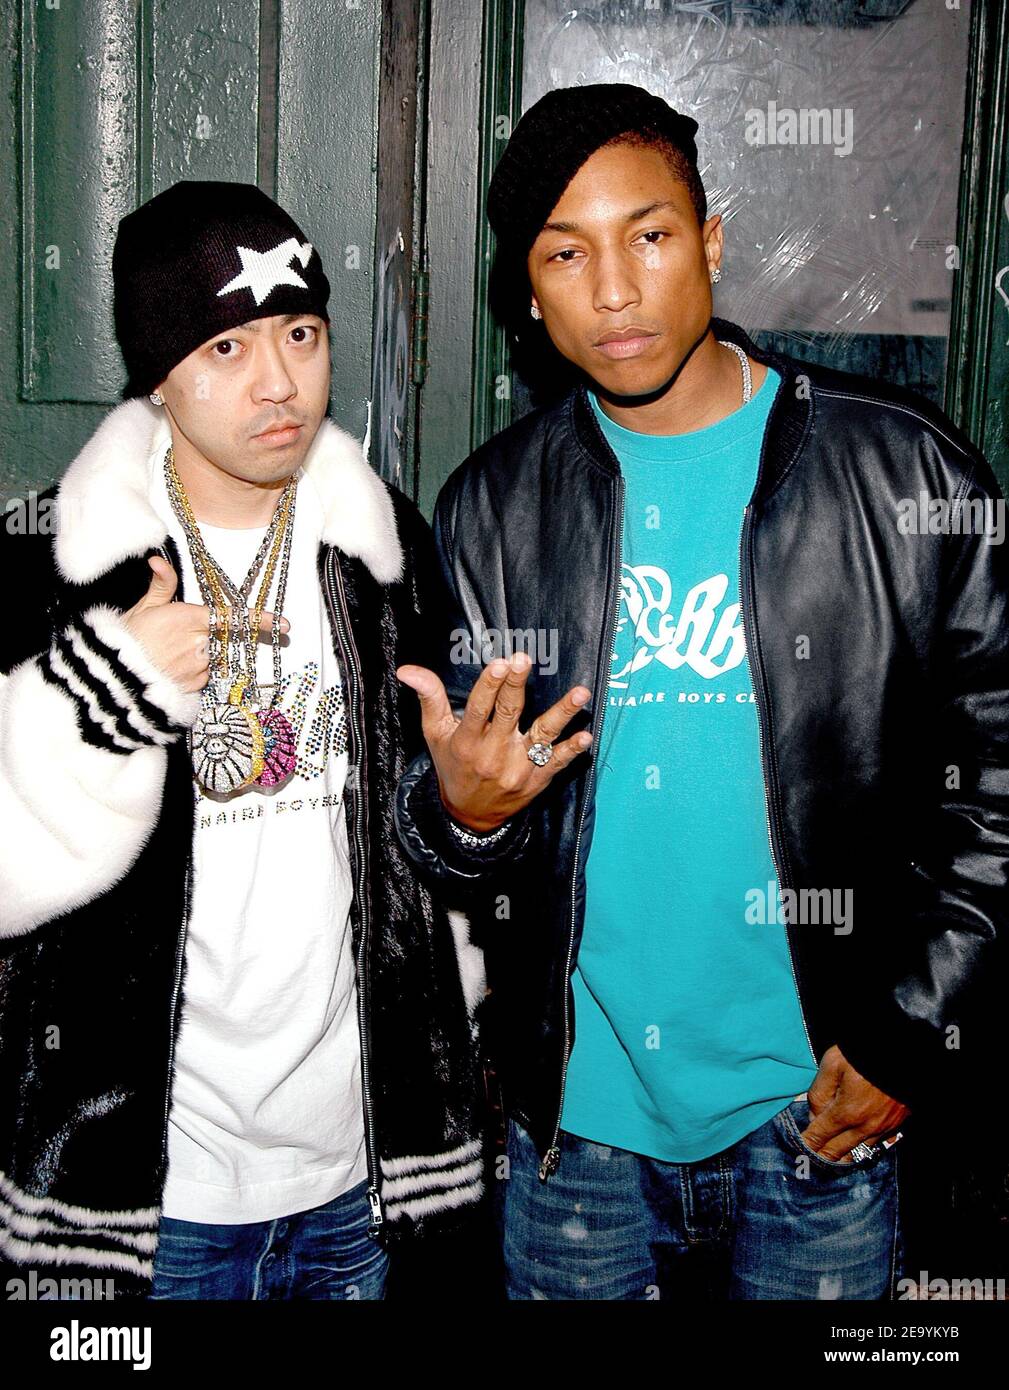 image therapy — Nigo & Pharrell at Disney World (2005)